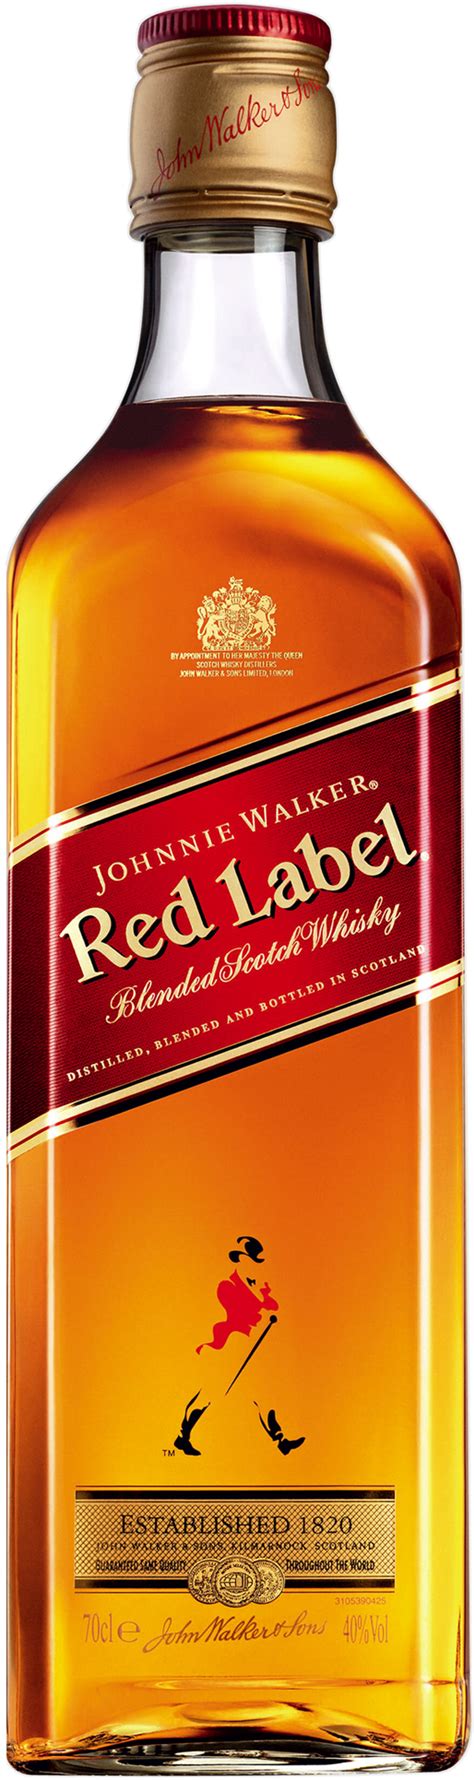 Johnnie Walker Red Label Scotch Whisky 700ml - Johnnie Walker Red Label 1 Litre - Free ...